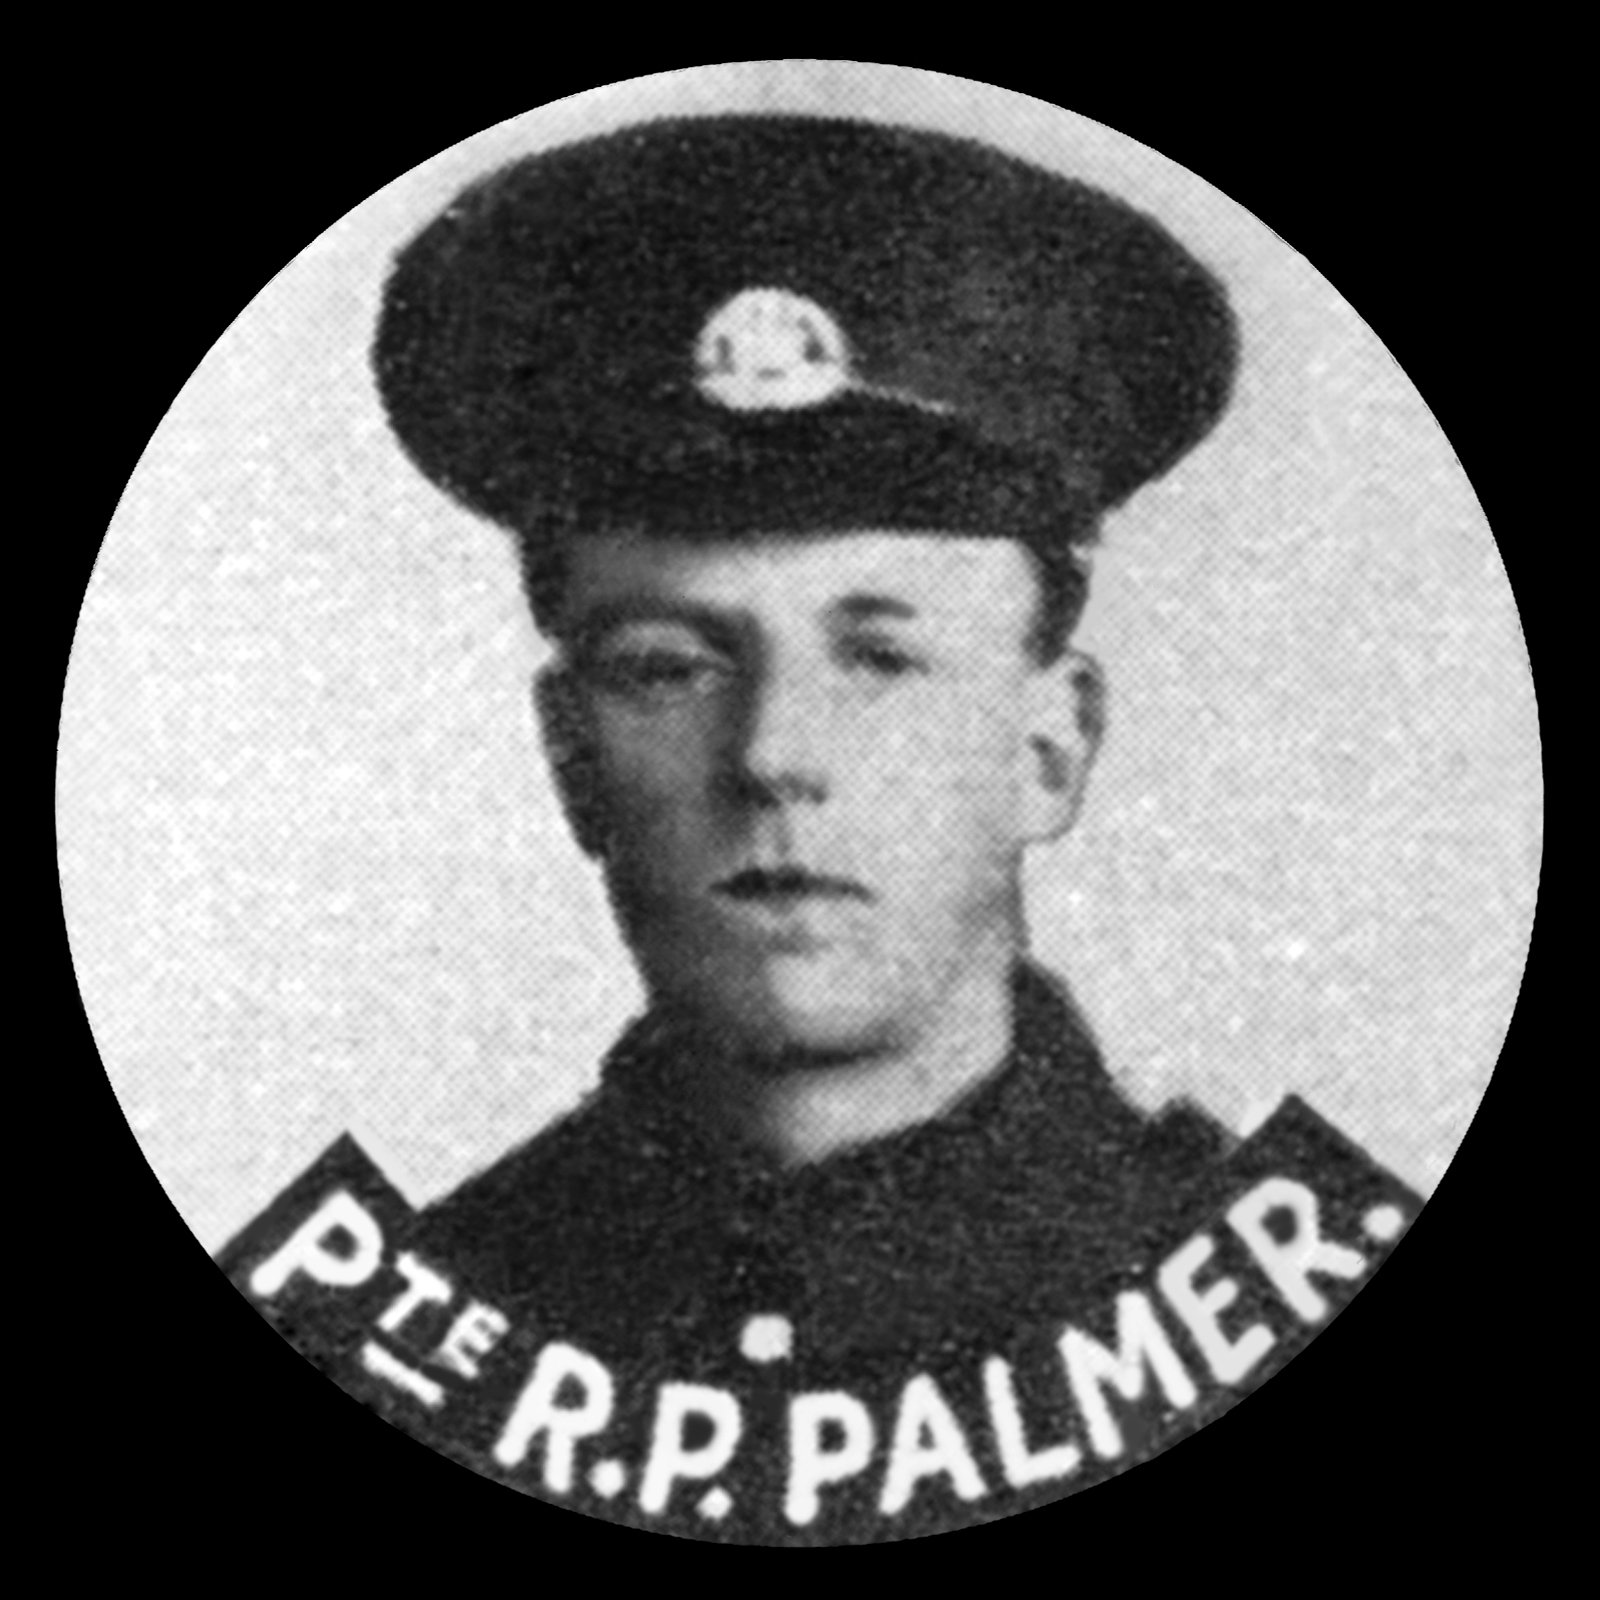 PALMER Robert Percy